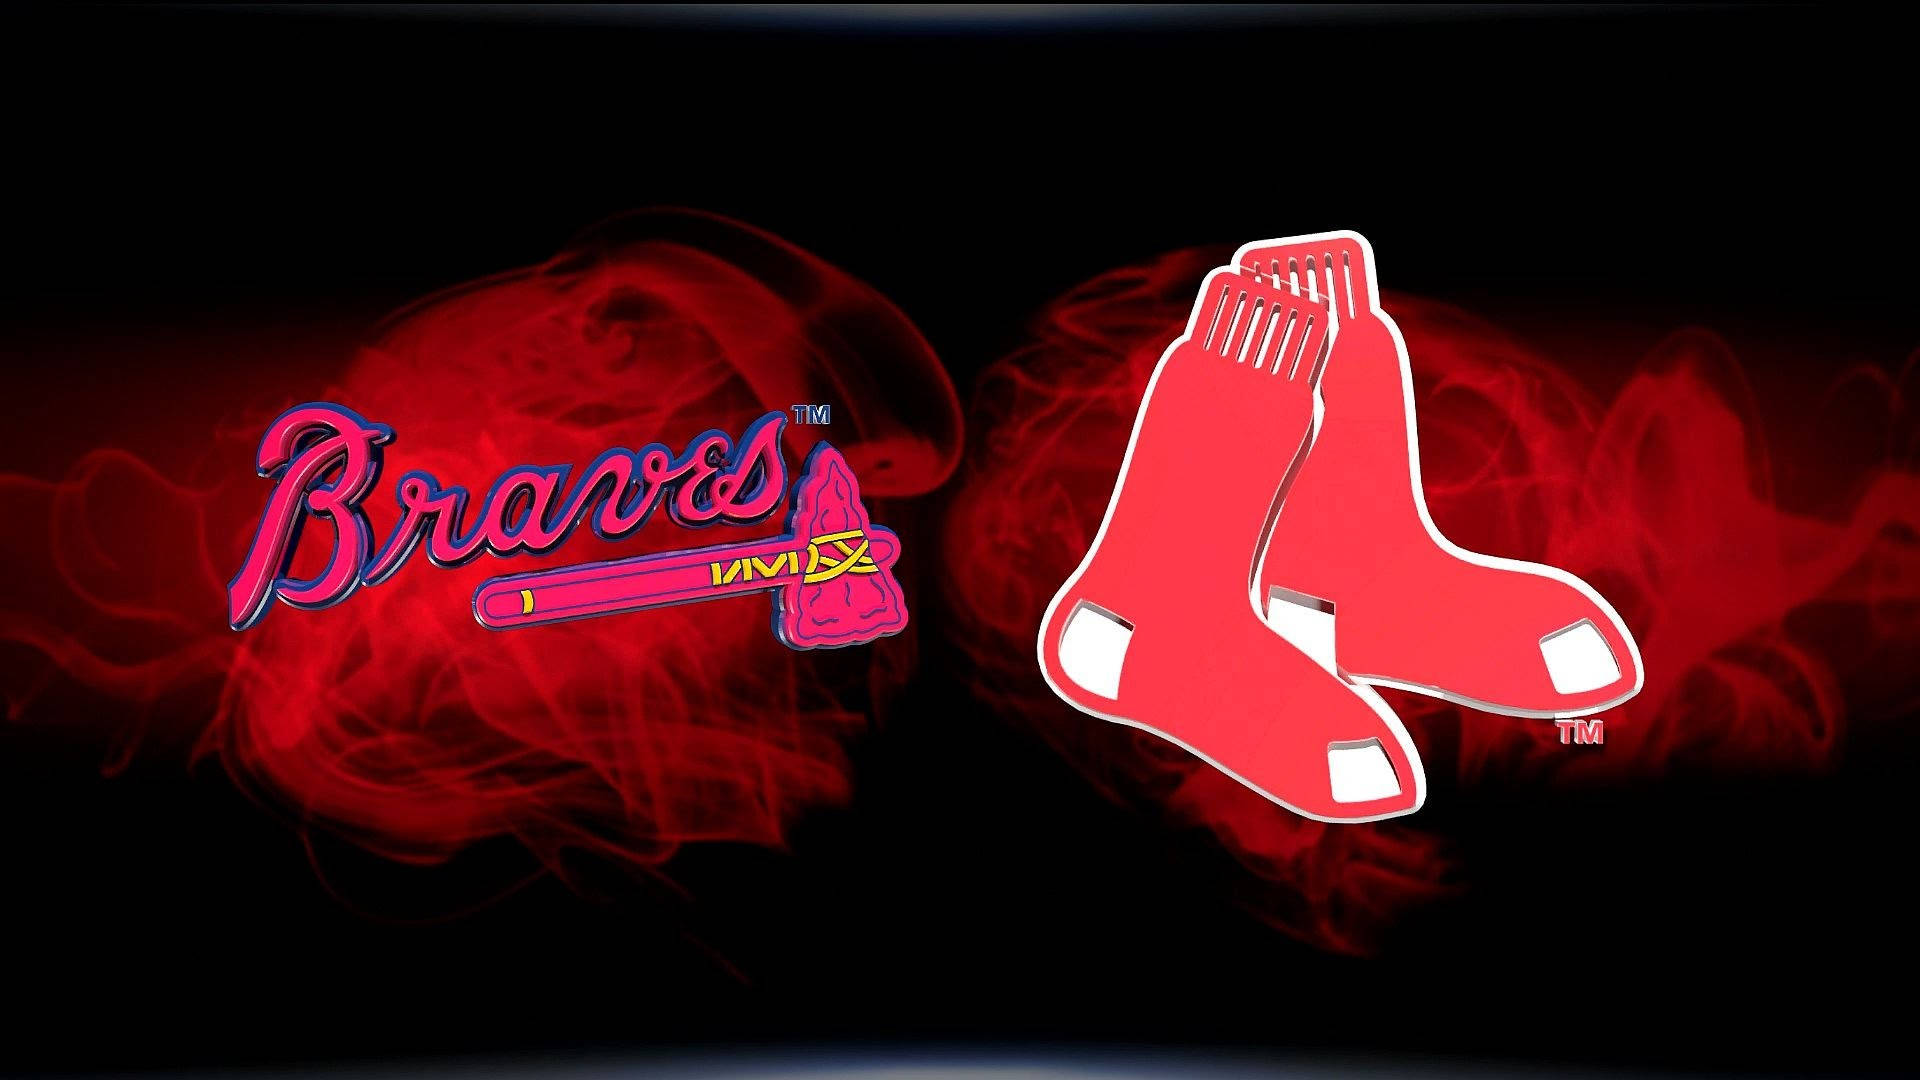 Atlanta Braves Versus Red Sox Background